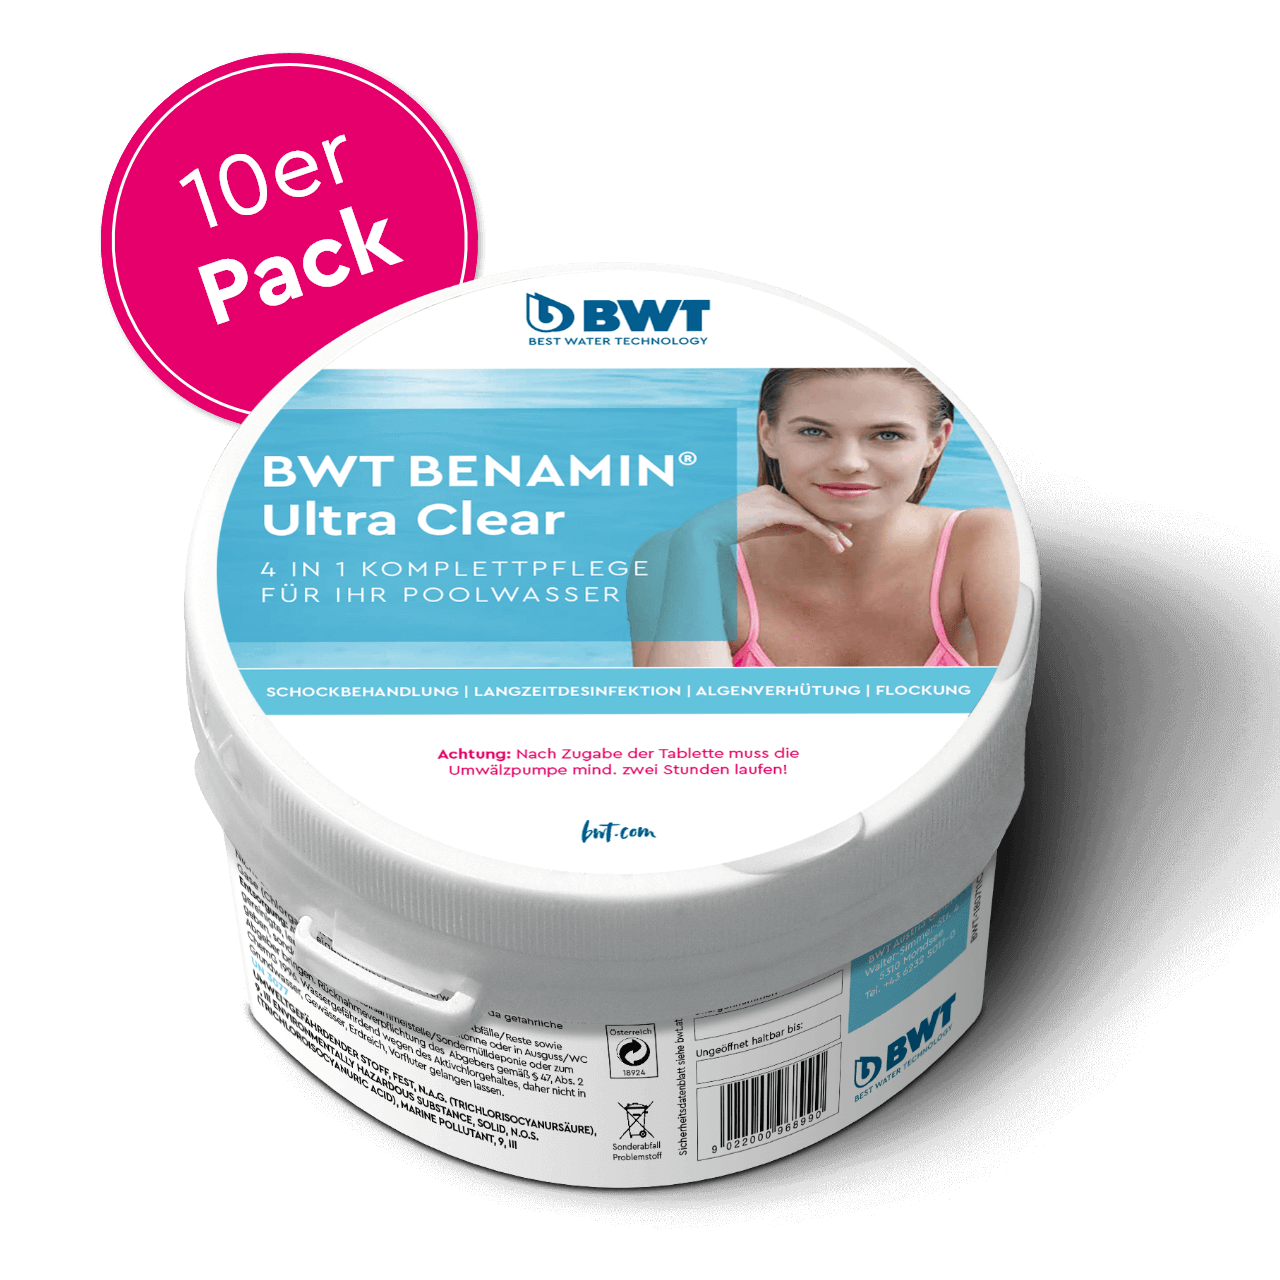 BWT Benamin Ultra Clear pack of ten